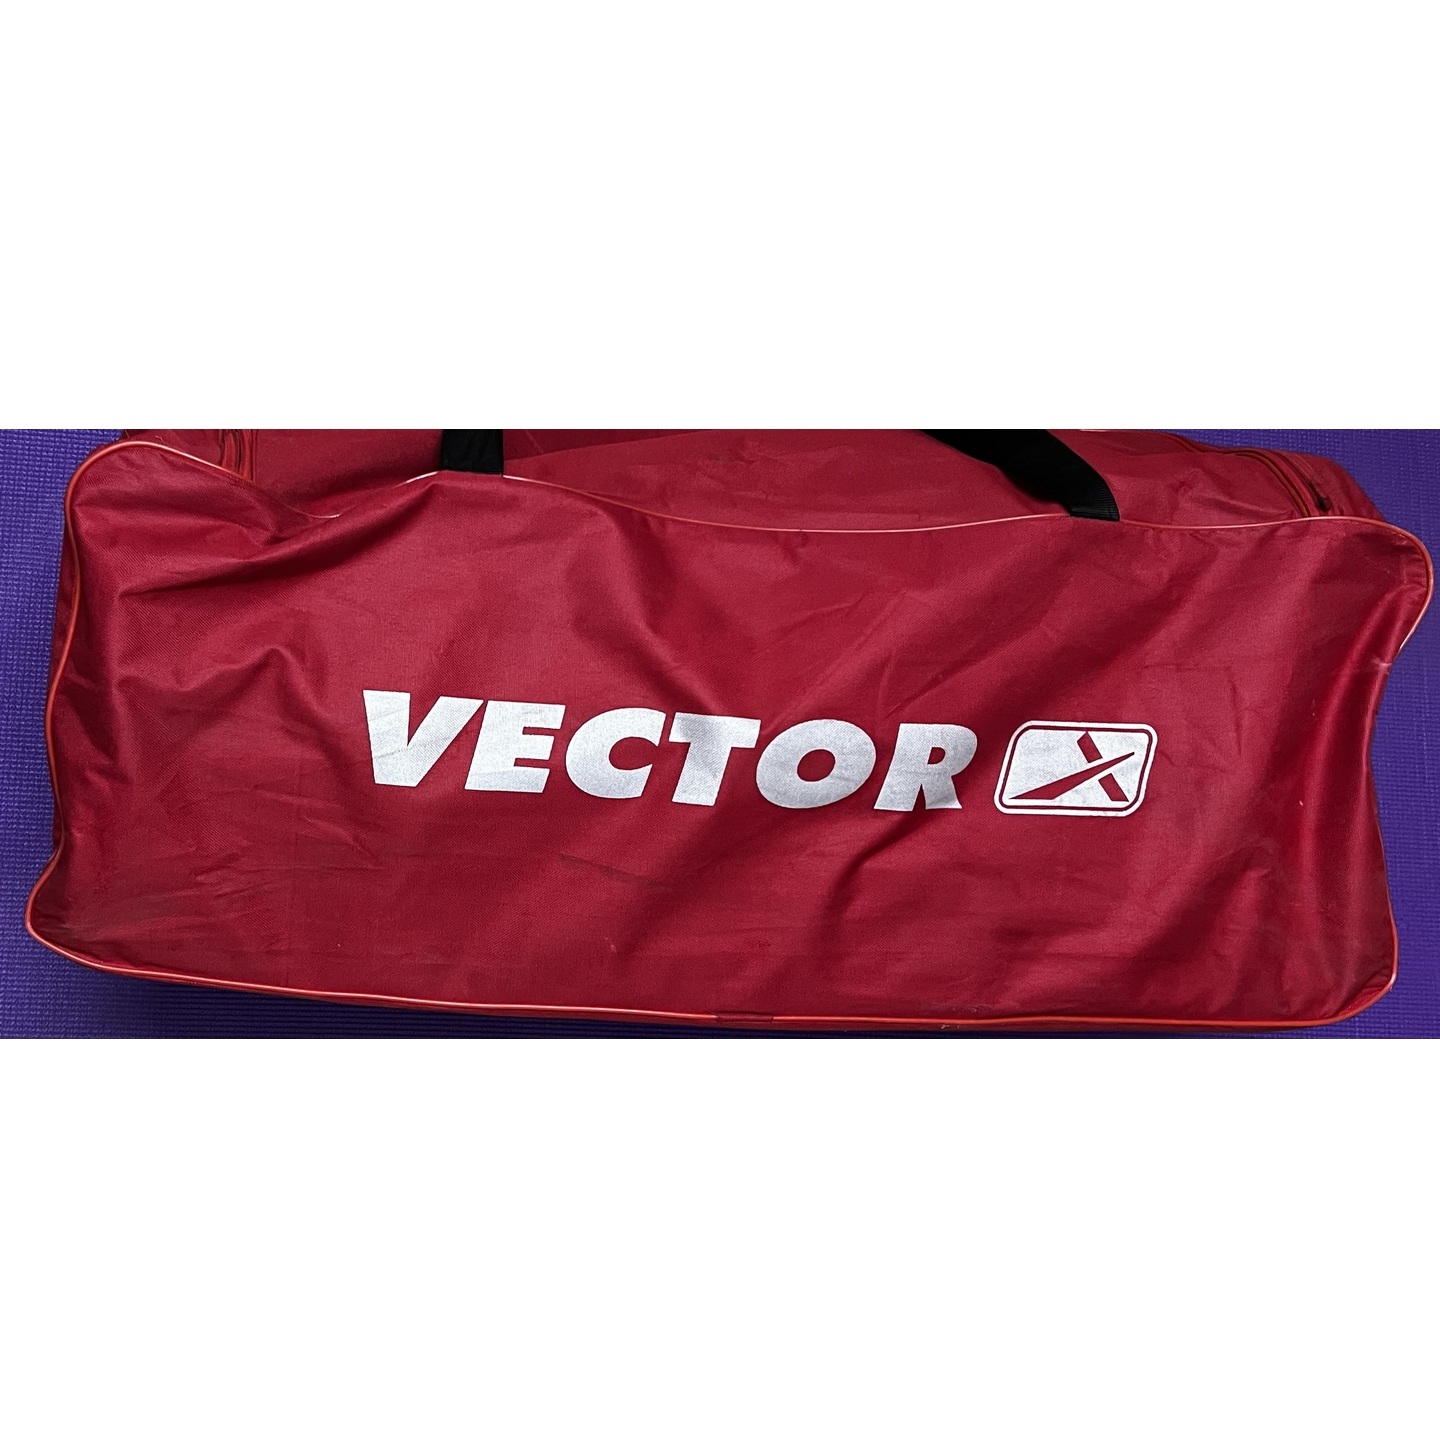 VECTOR-X SUPER MAX TEAM SIZE KIT BAG